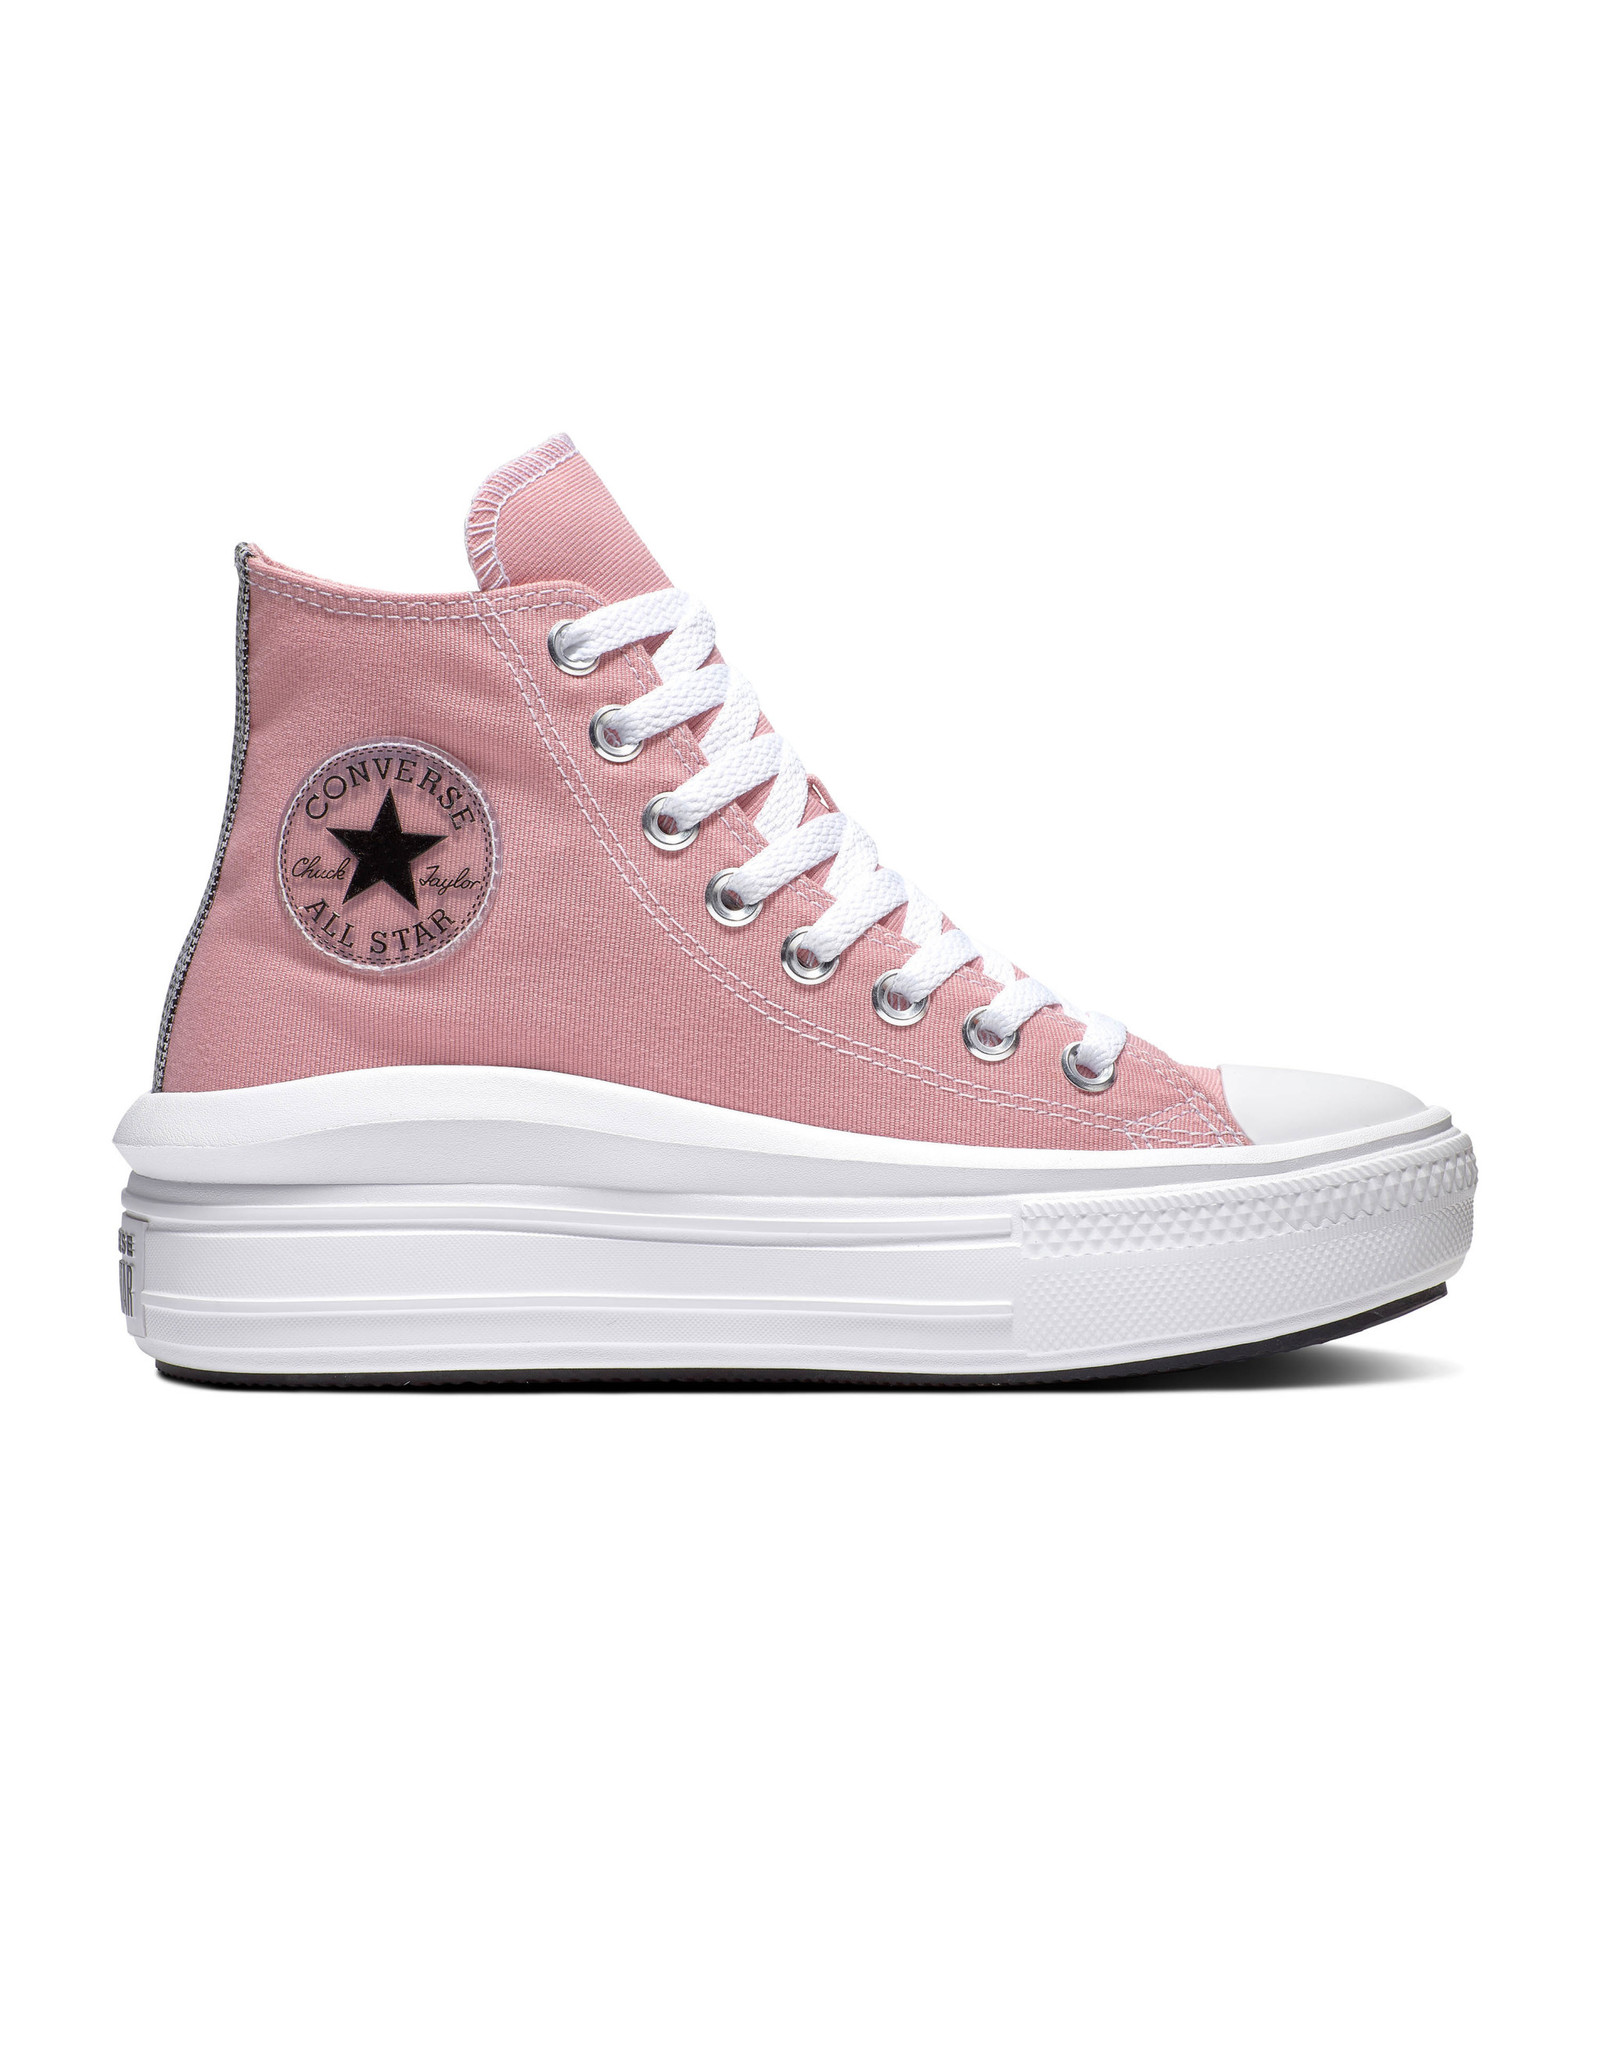 pink black converse